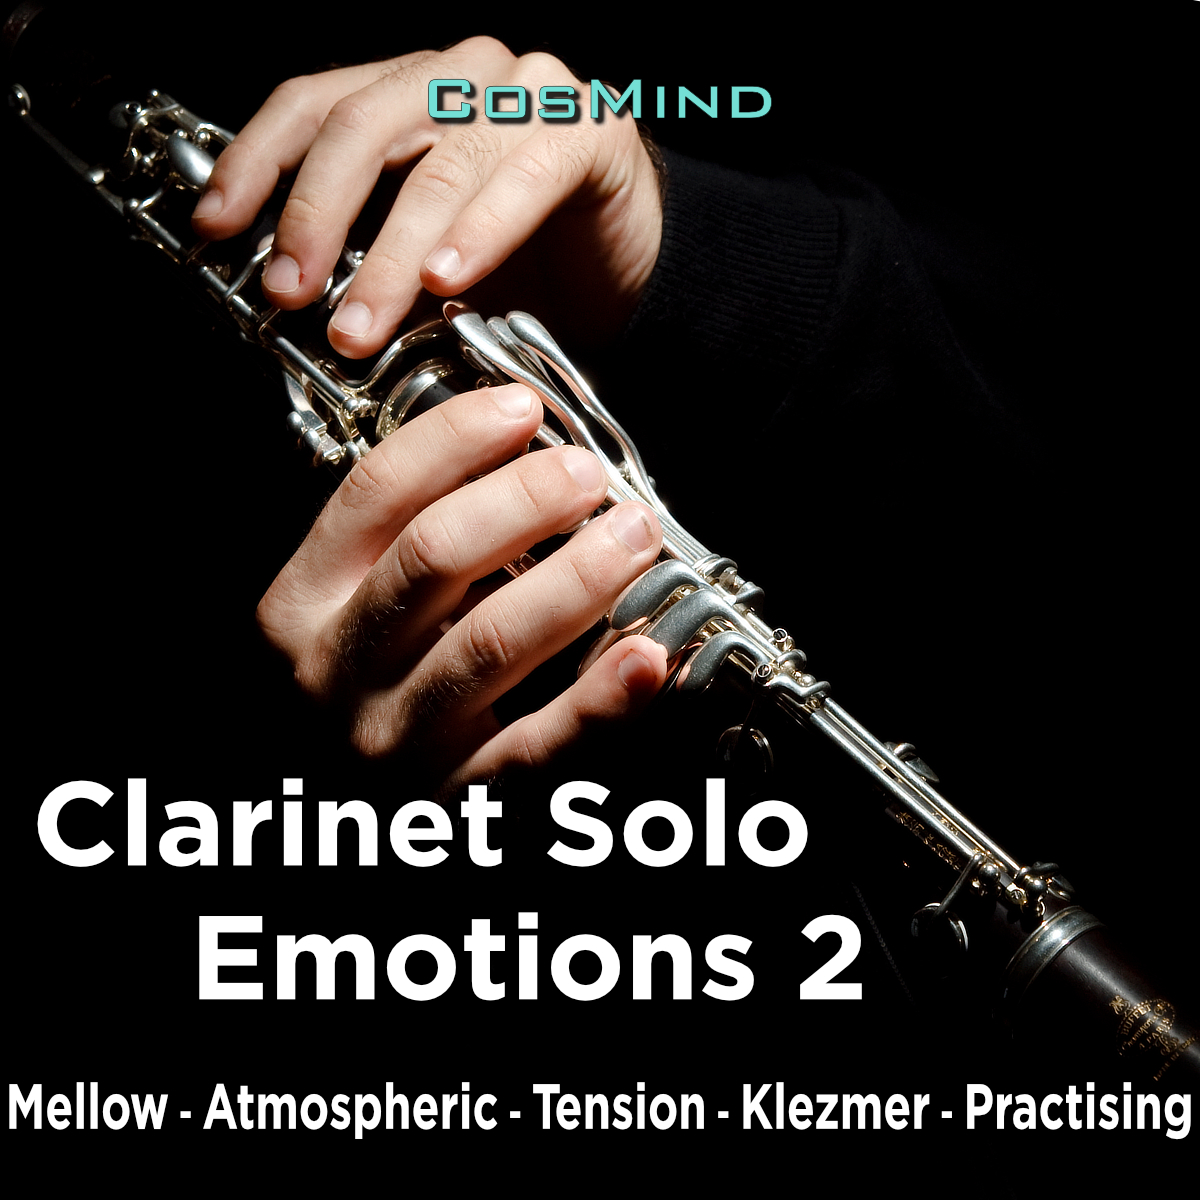 Clarinet-Solo Emotions (Vol.2)